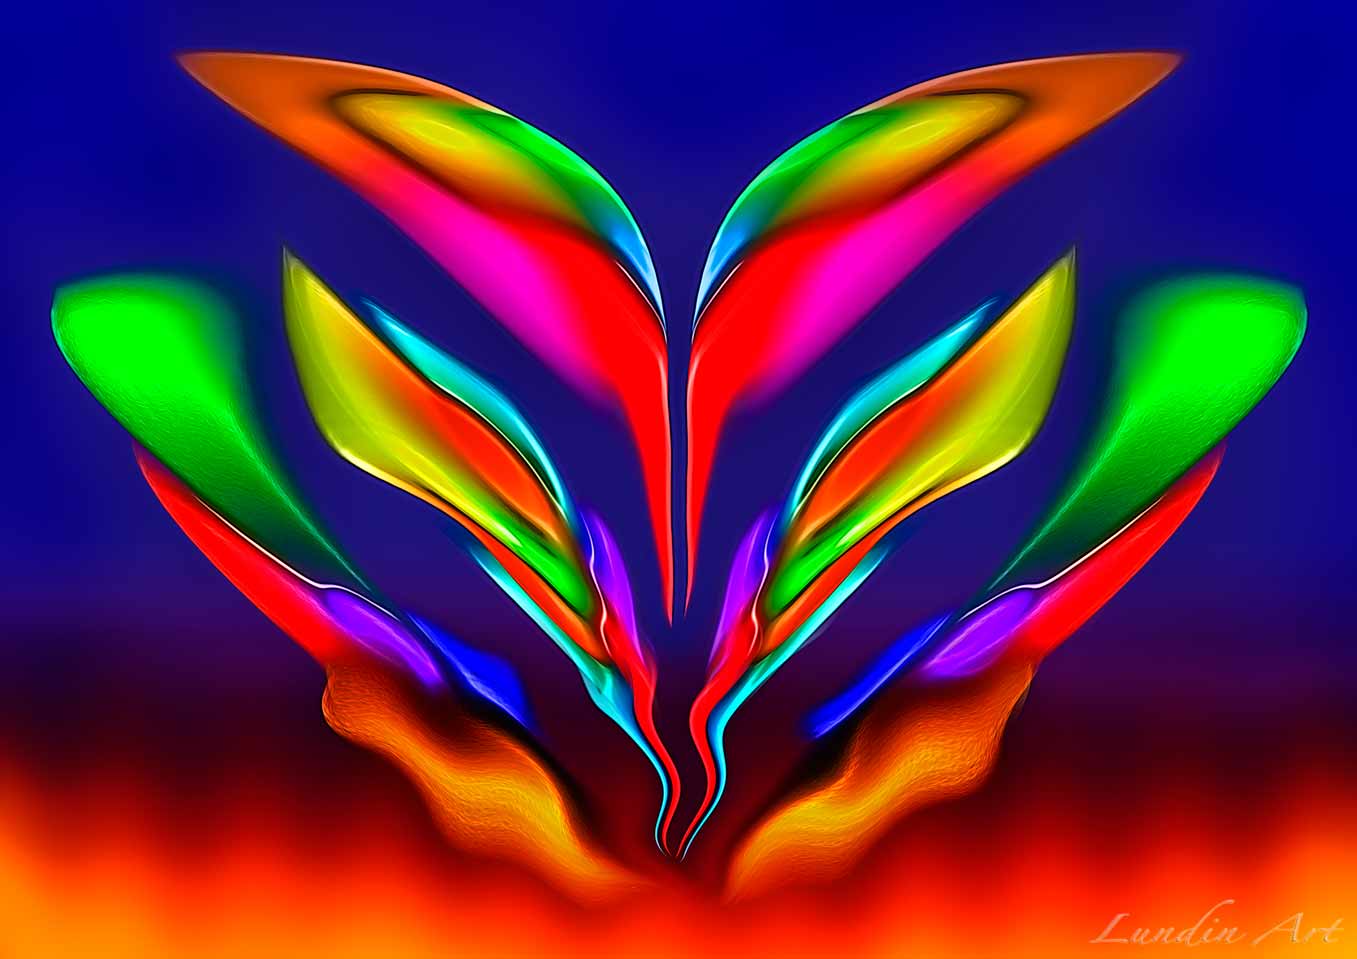 Digital Art/ArtWork/Painting/Kunst/Maleri/Heat melting colors - Jens Lundin Art